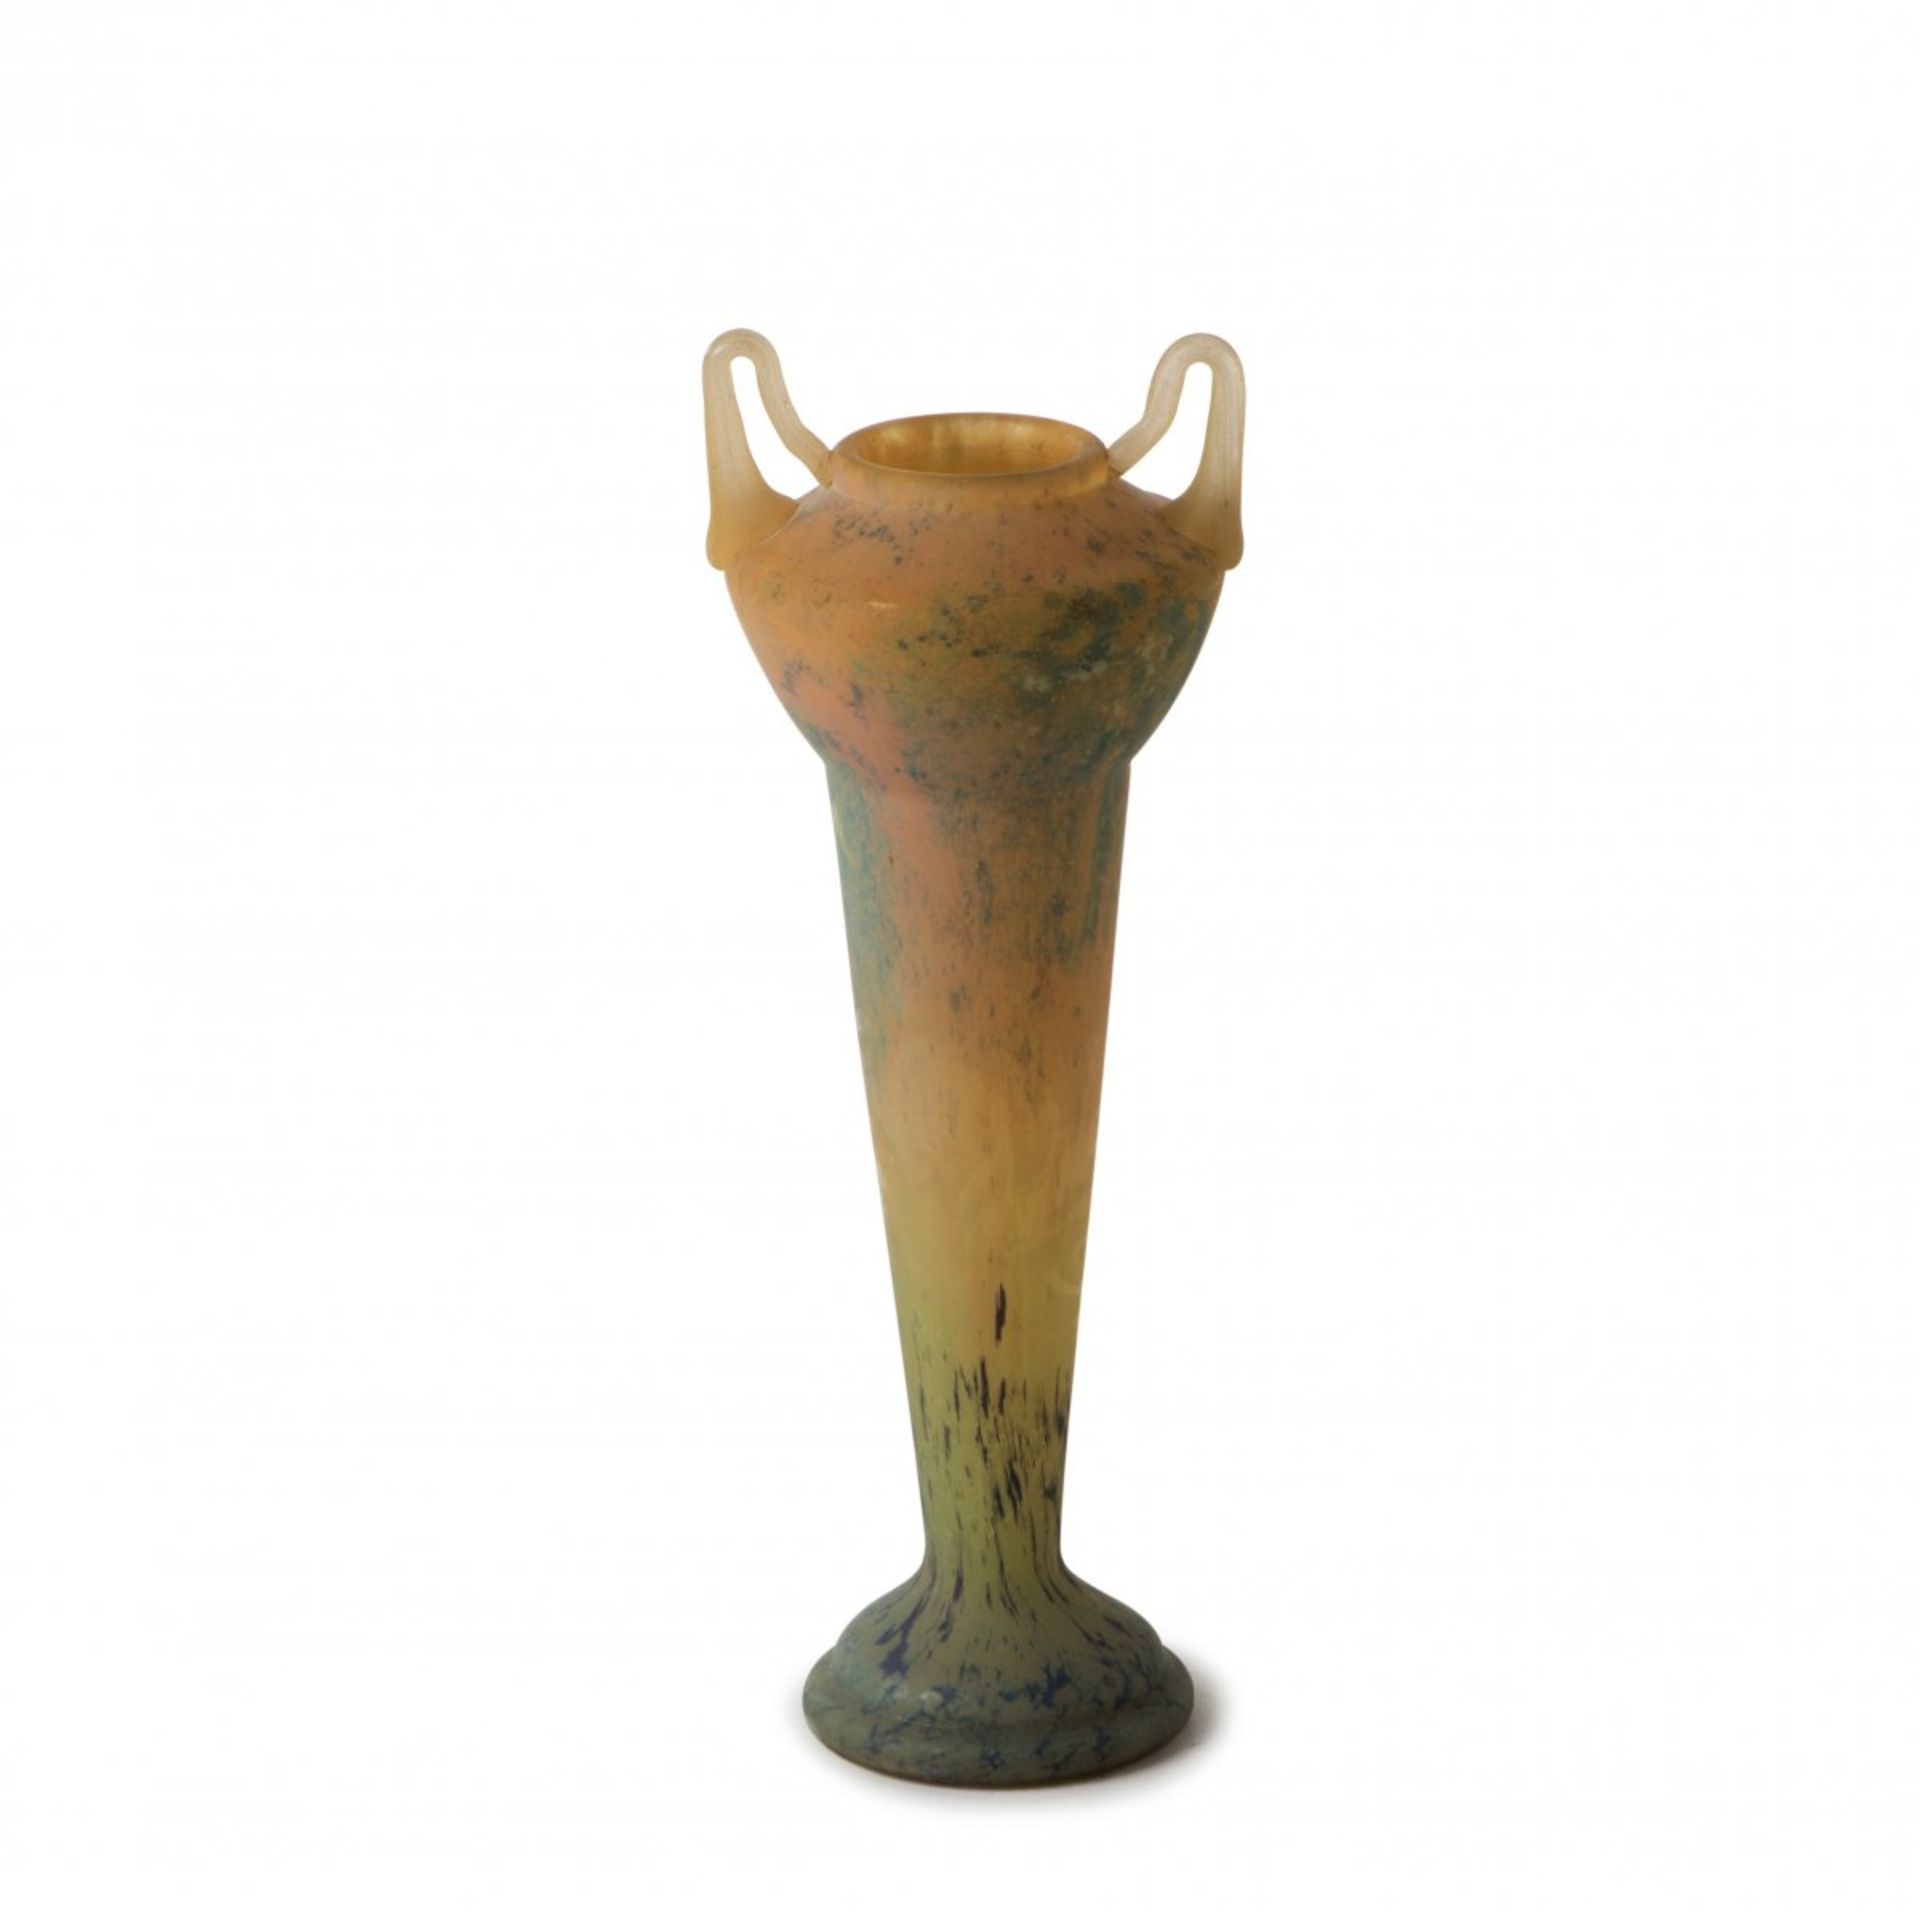 Daum Frères, Nancy, Vase with handles, c. 1910-15